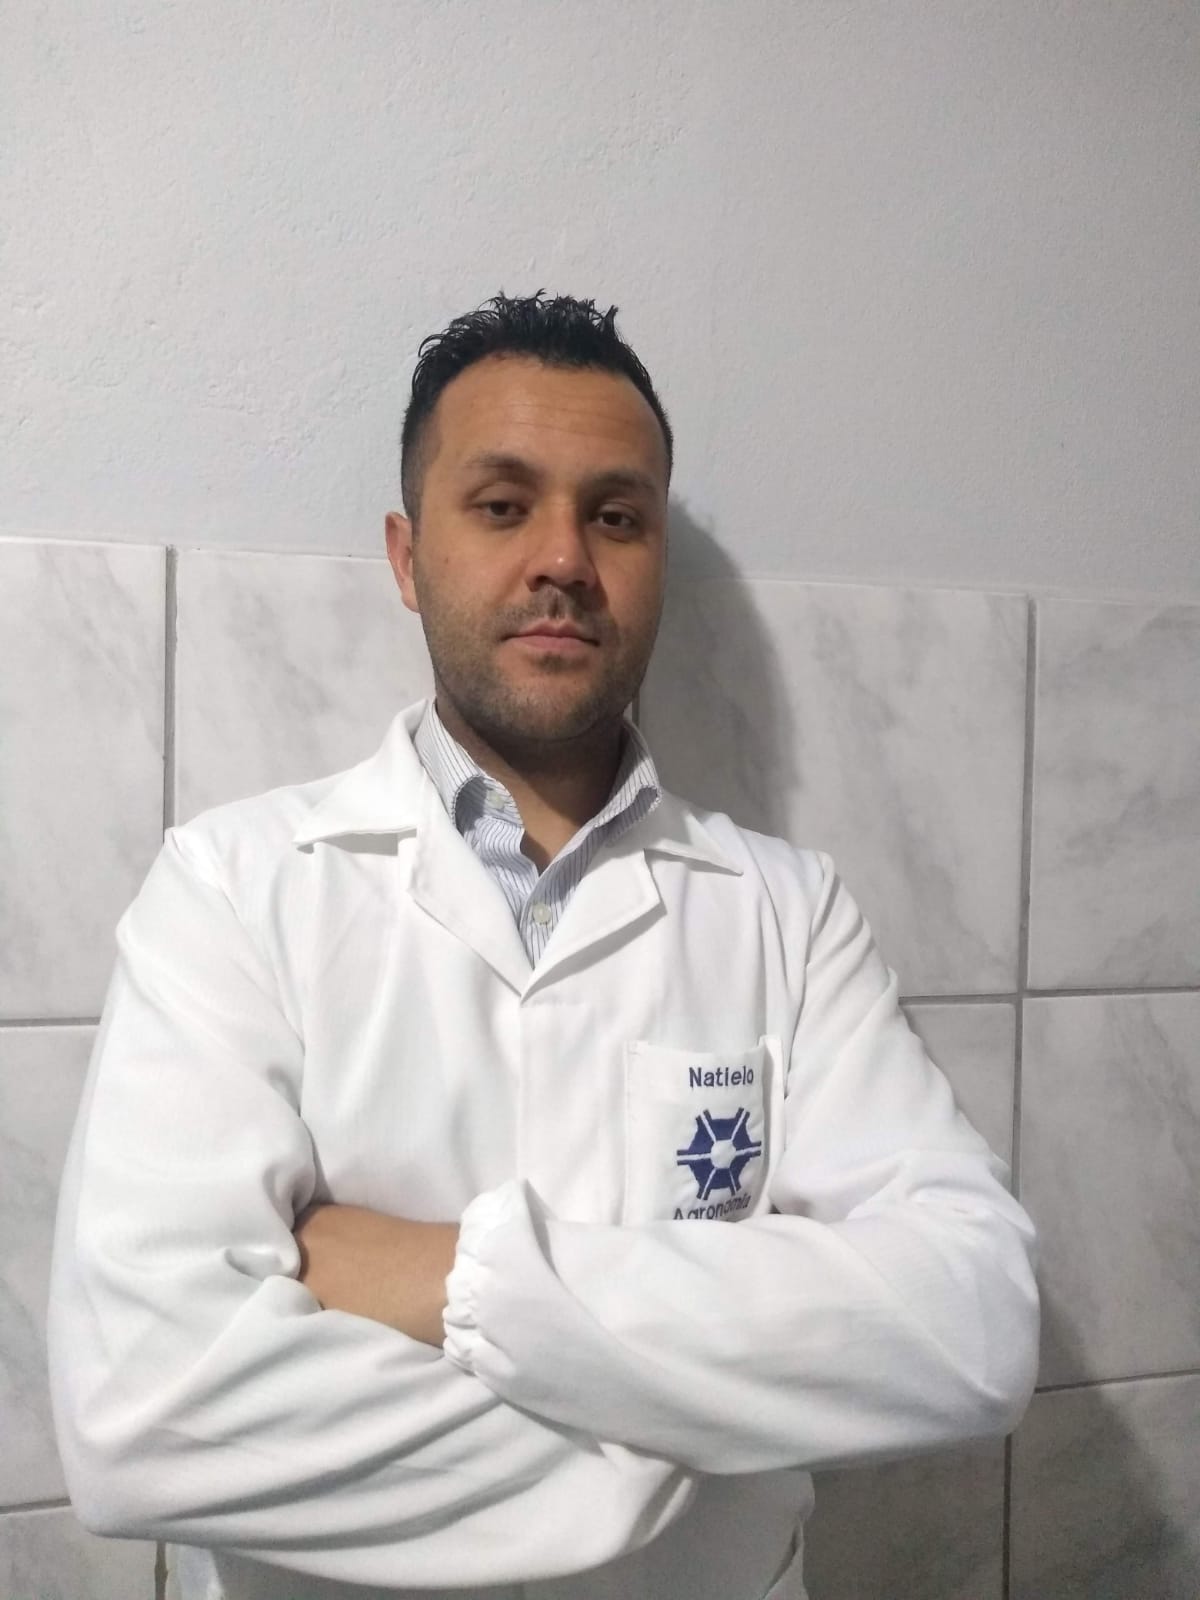 Dr. Natielo Almeida Santana